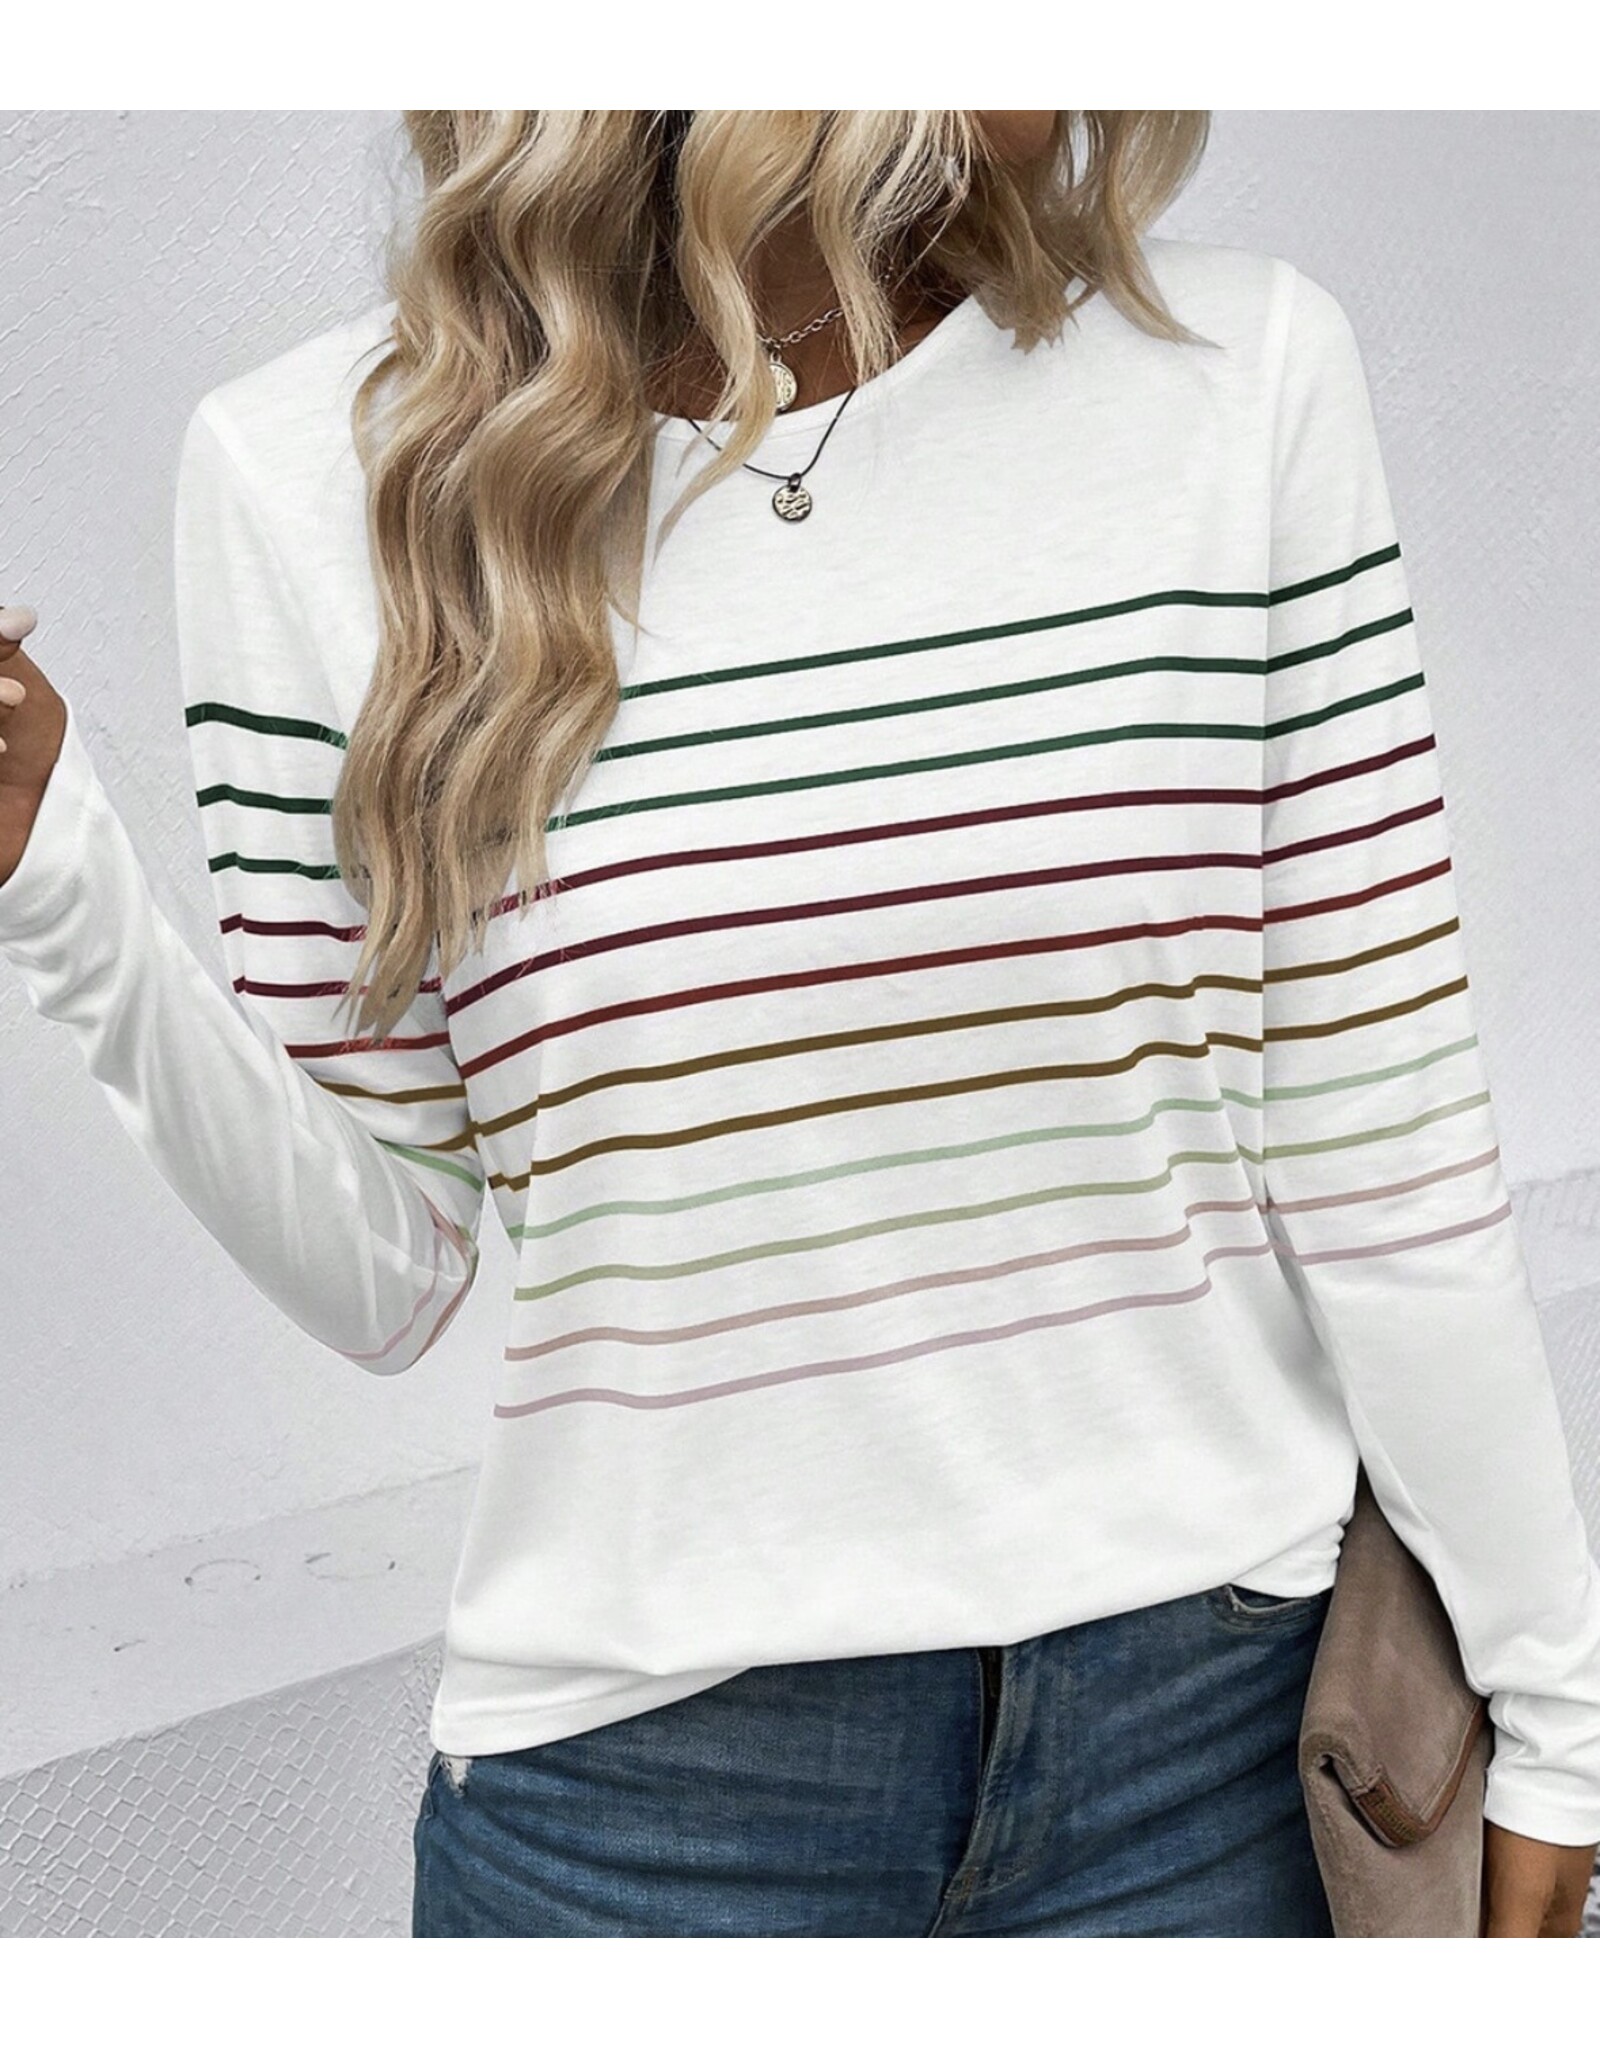 LATA Multicolor Stripe Long Sleeve Top